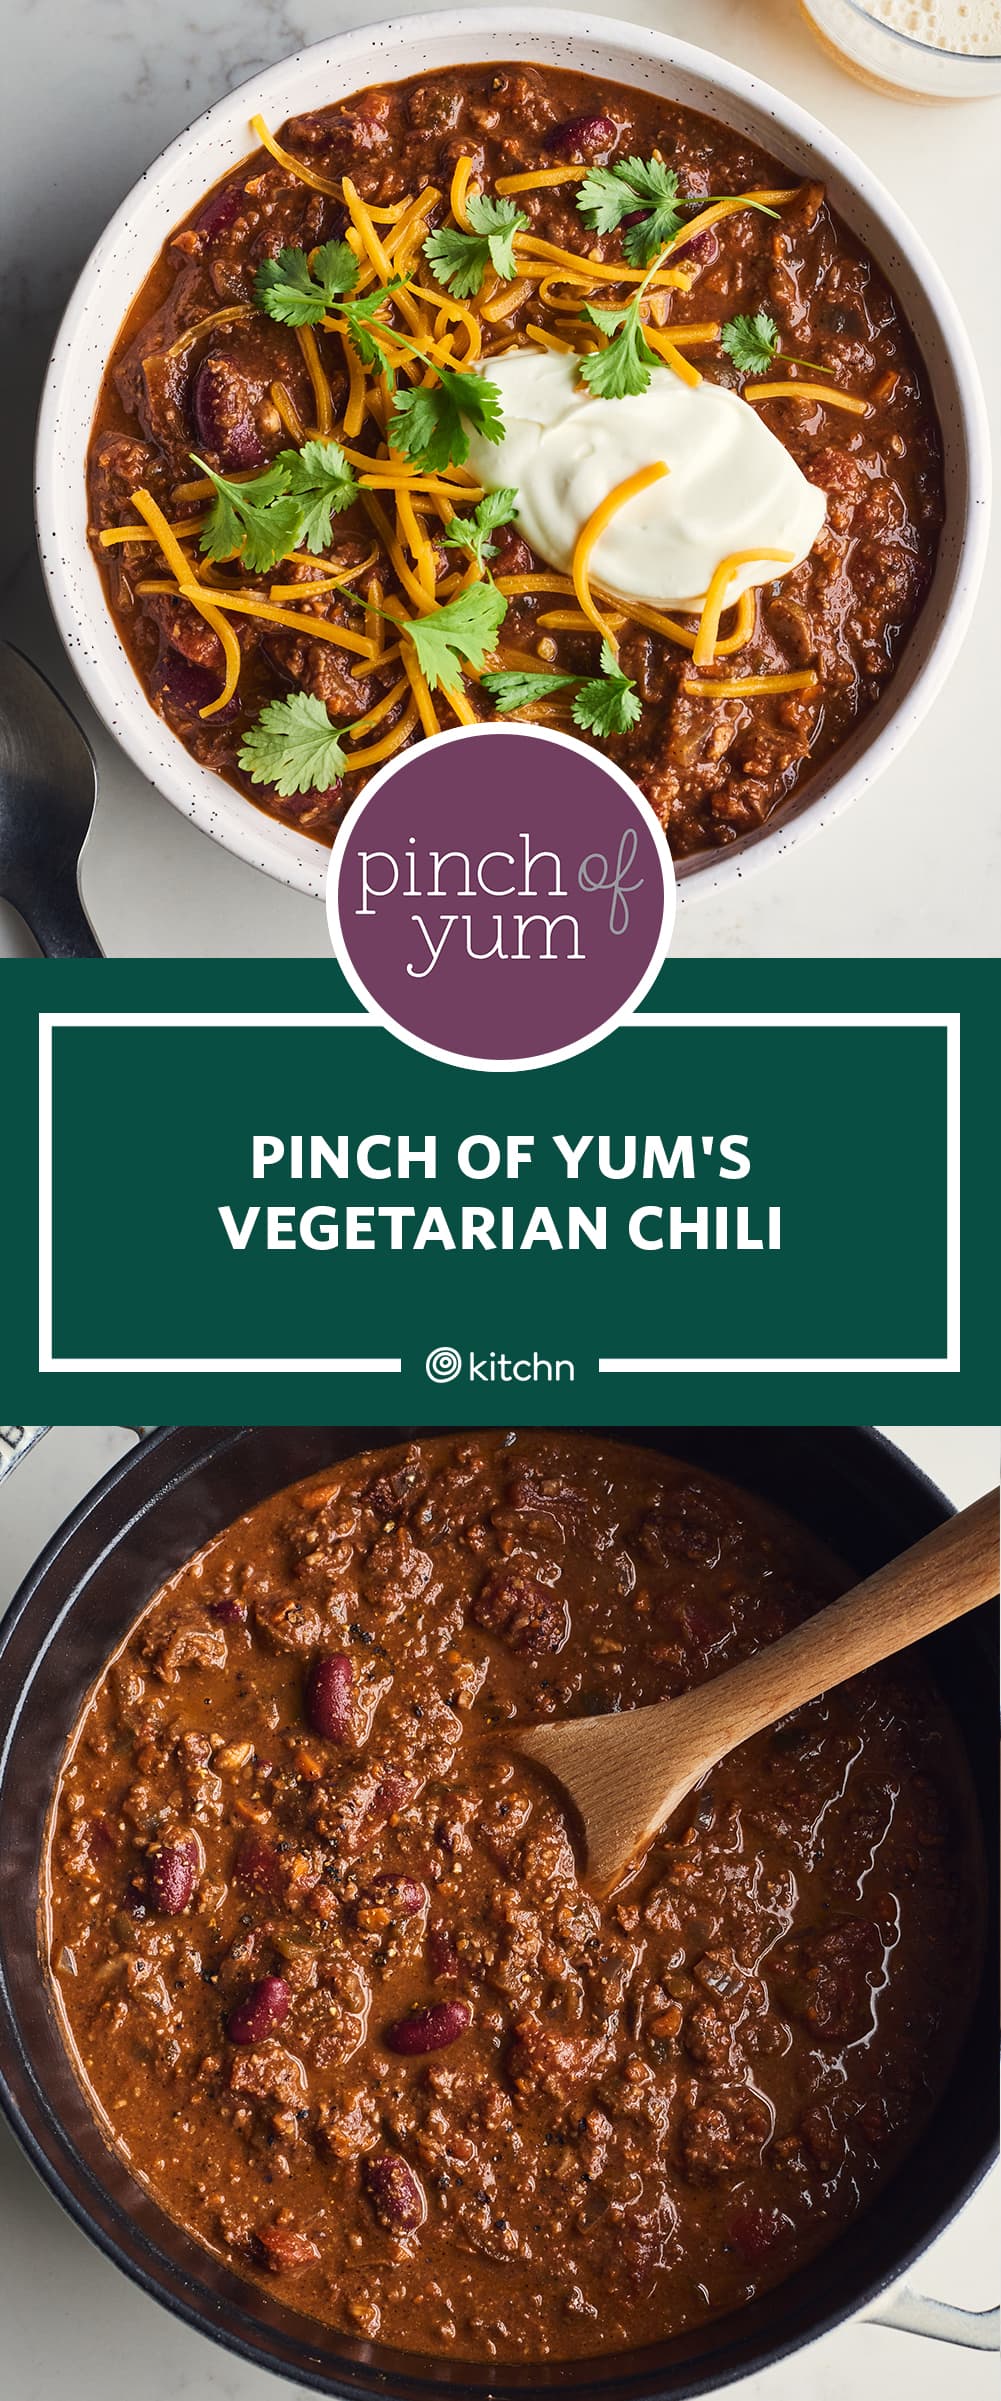 https://cdn.apartmenttherapy.info/image/upload/v1634761872/k/Photo/Series/2021-veg-chilis-showdown/showdown-vegetarian-chili-pin-pinch-of-yum.jpg